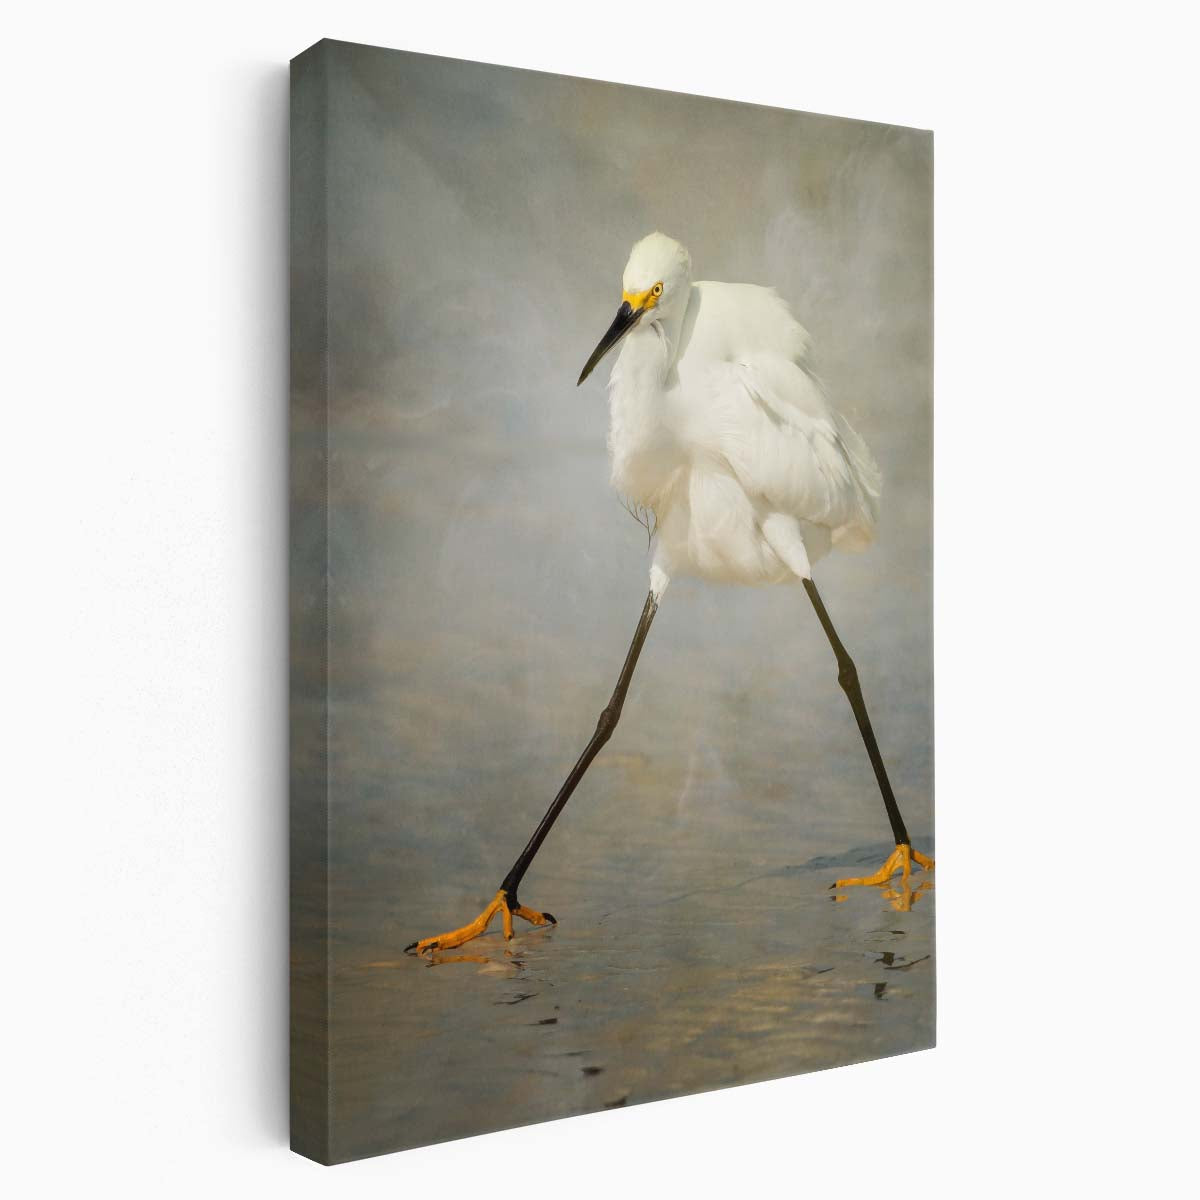 Snowy Egret Bird Photo Wall Art by Luxuriance Designs, made in USA